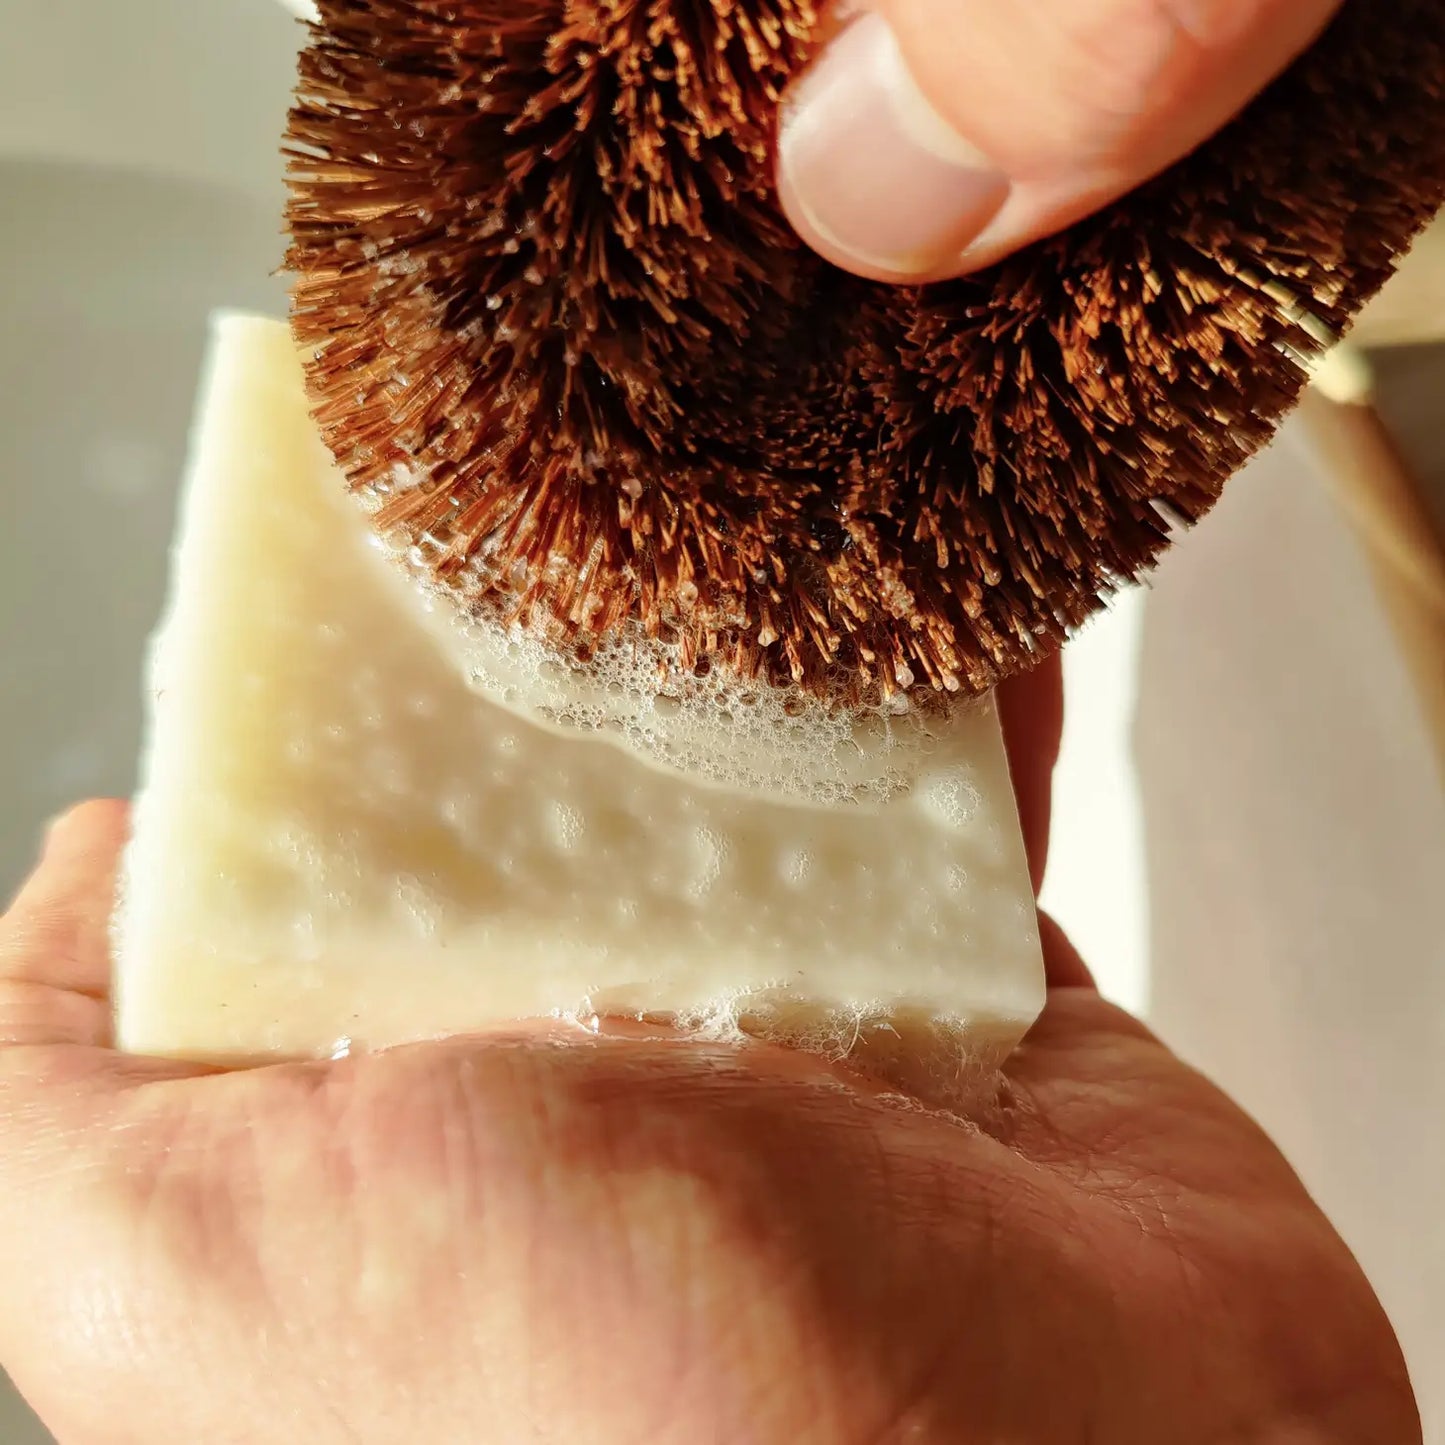 LoofCo Palm Oil-Free Dish Washing Soap Bar